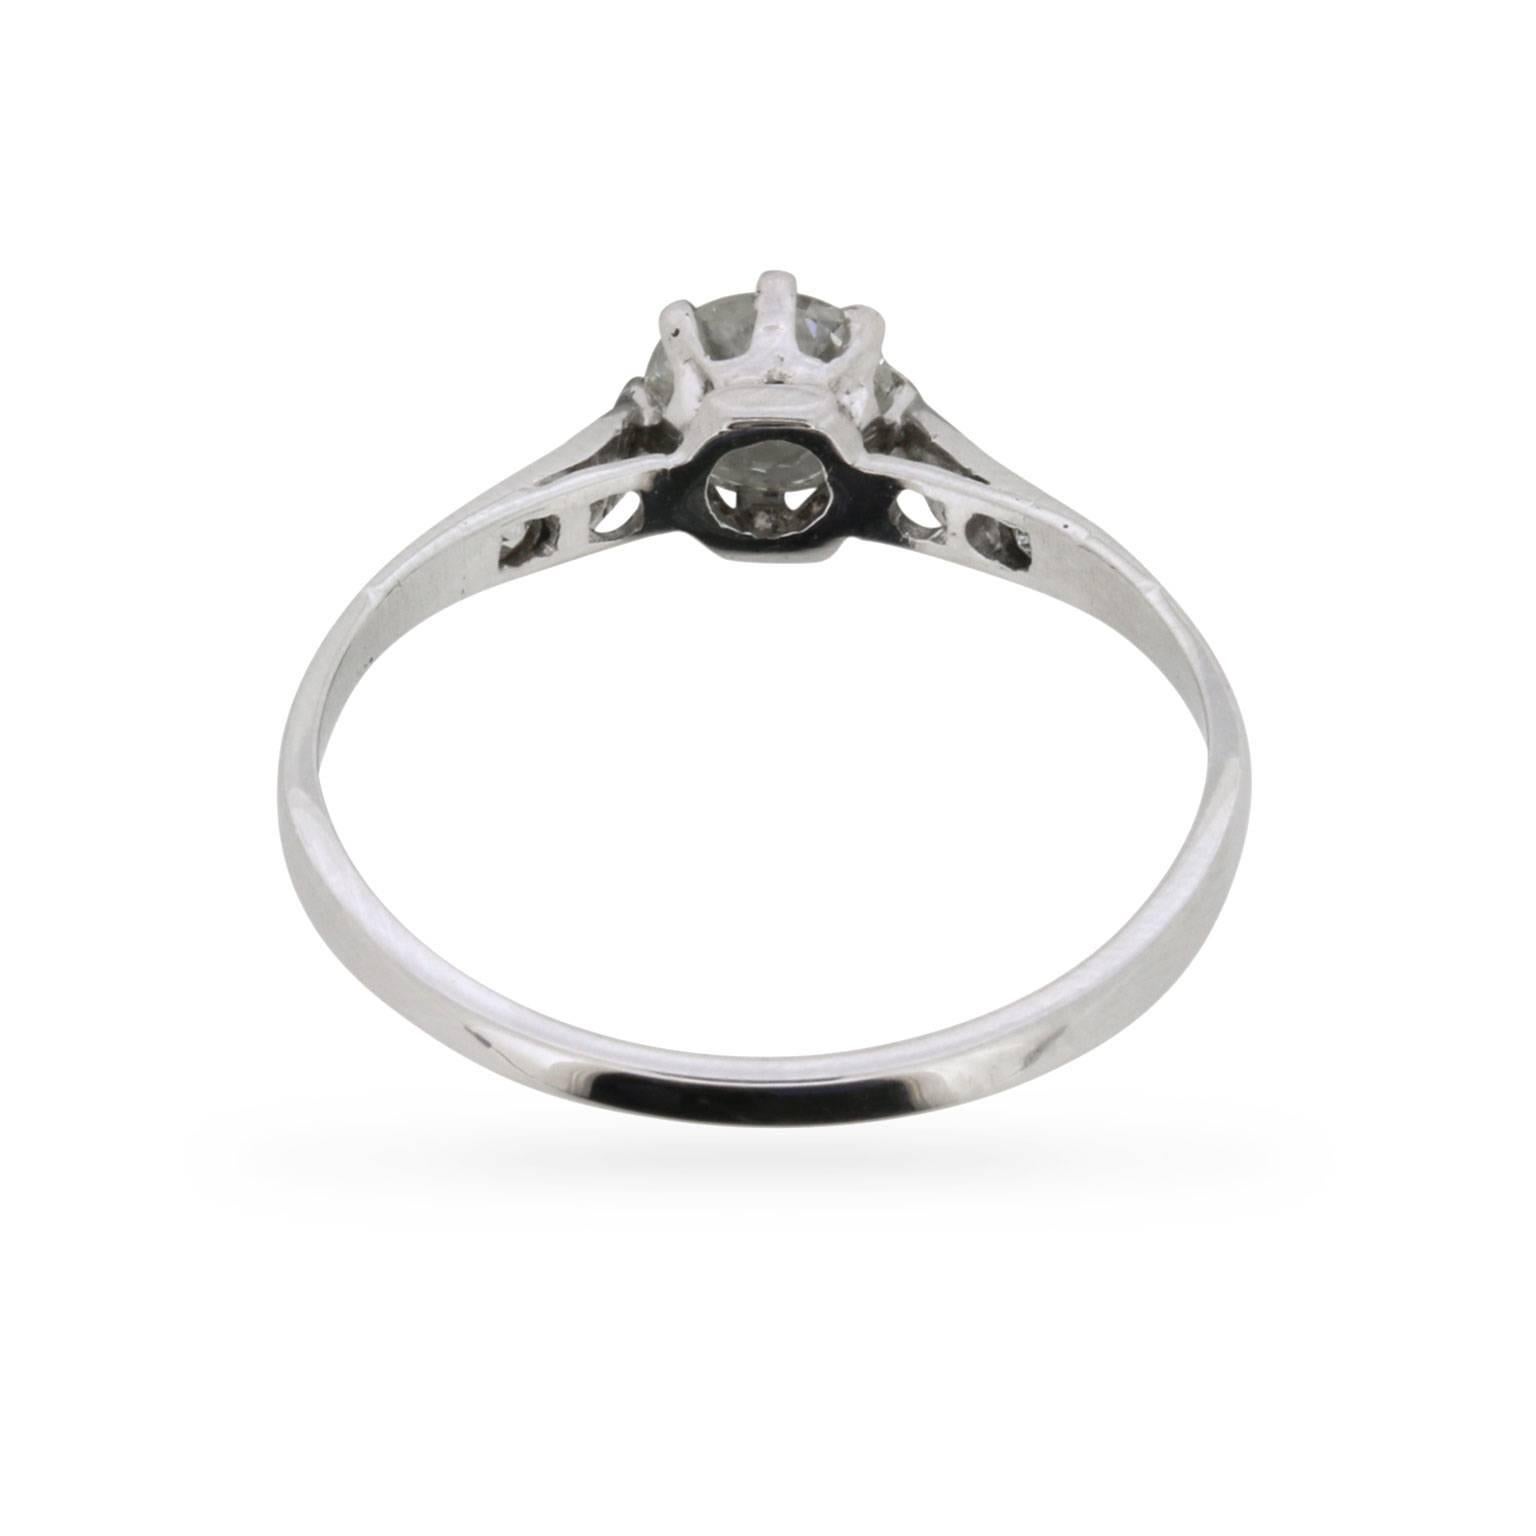 Women's or Men's Art Deco Diamond Solitaire Certified Ring, circa 1920s